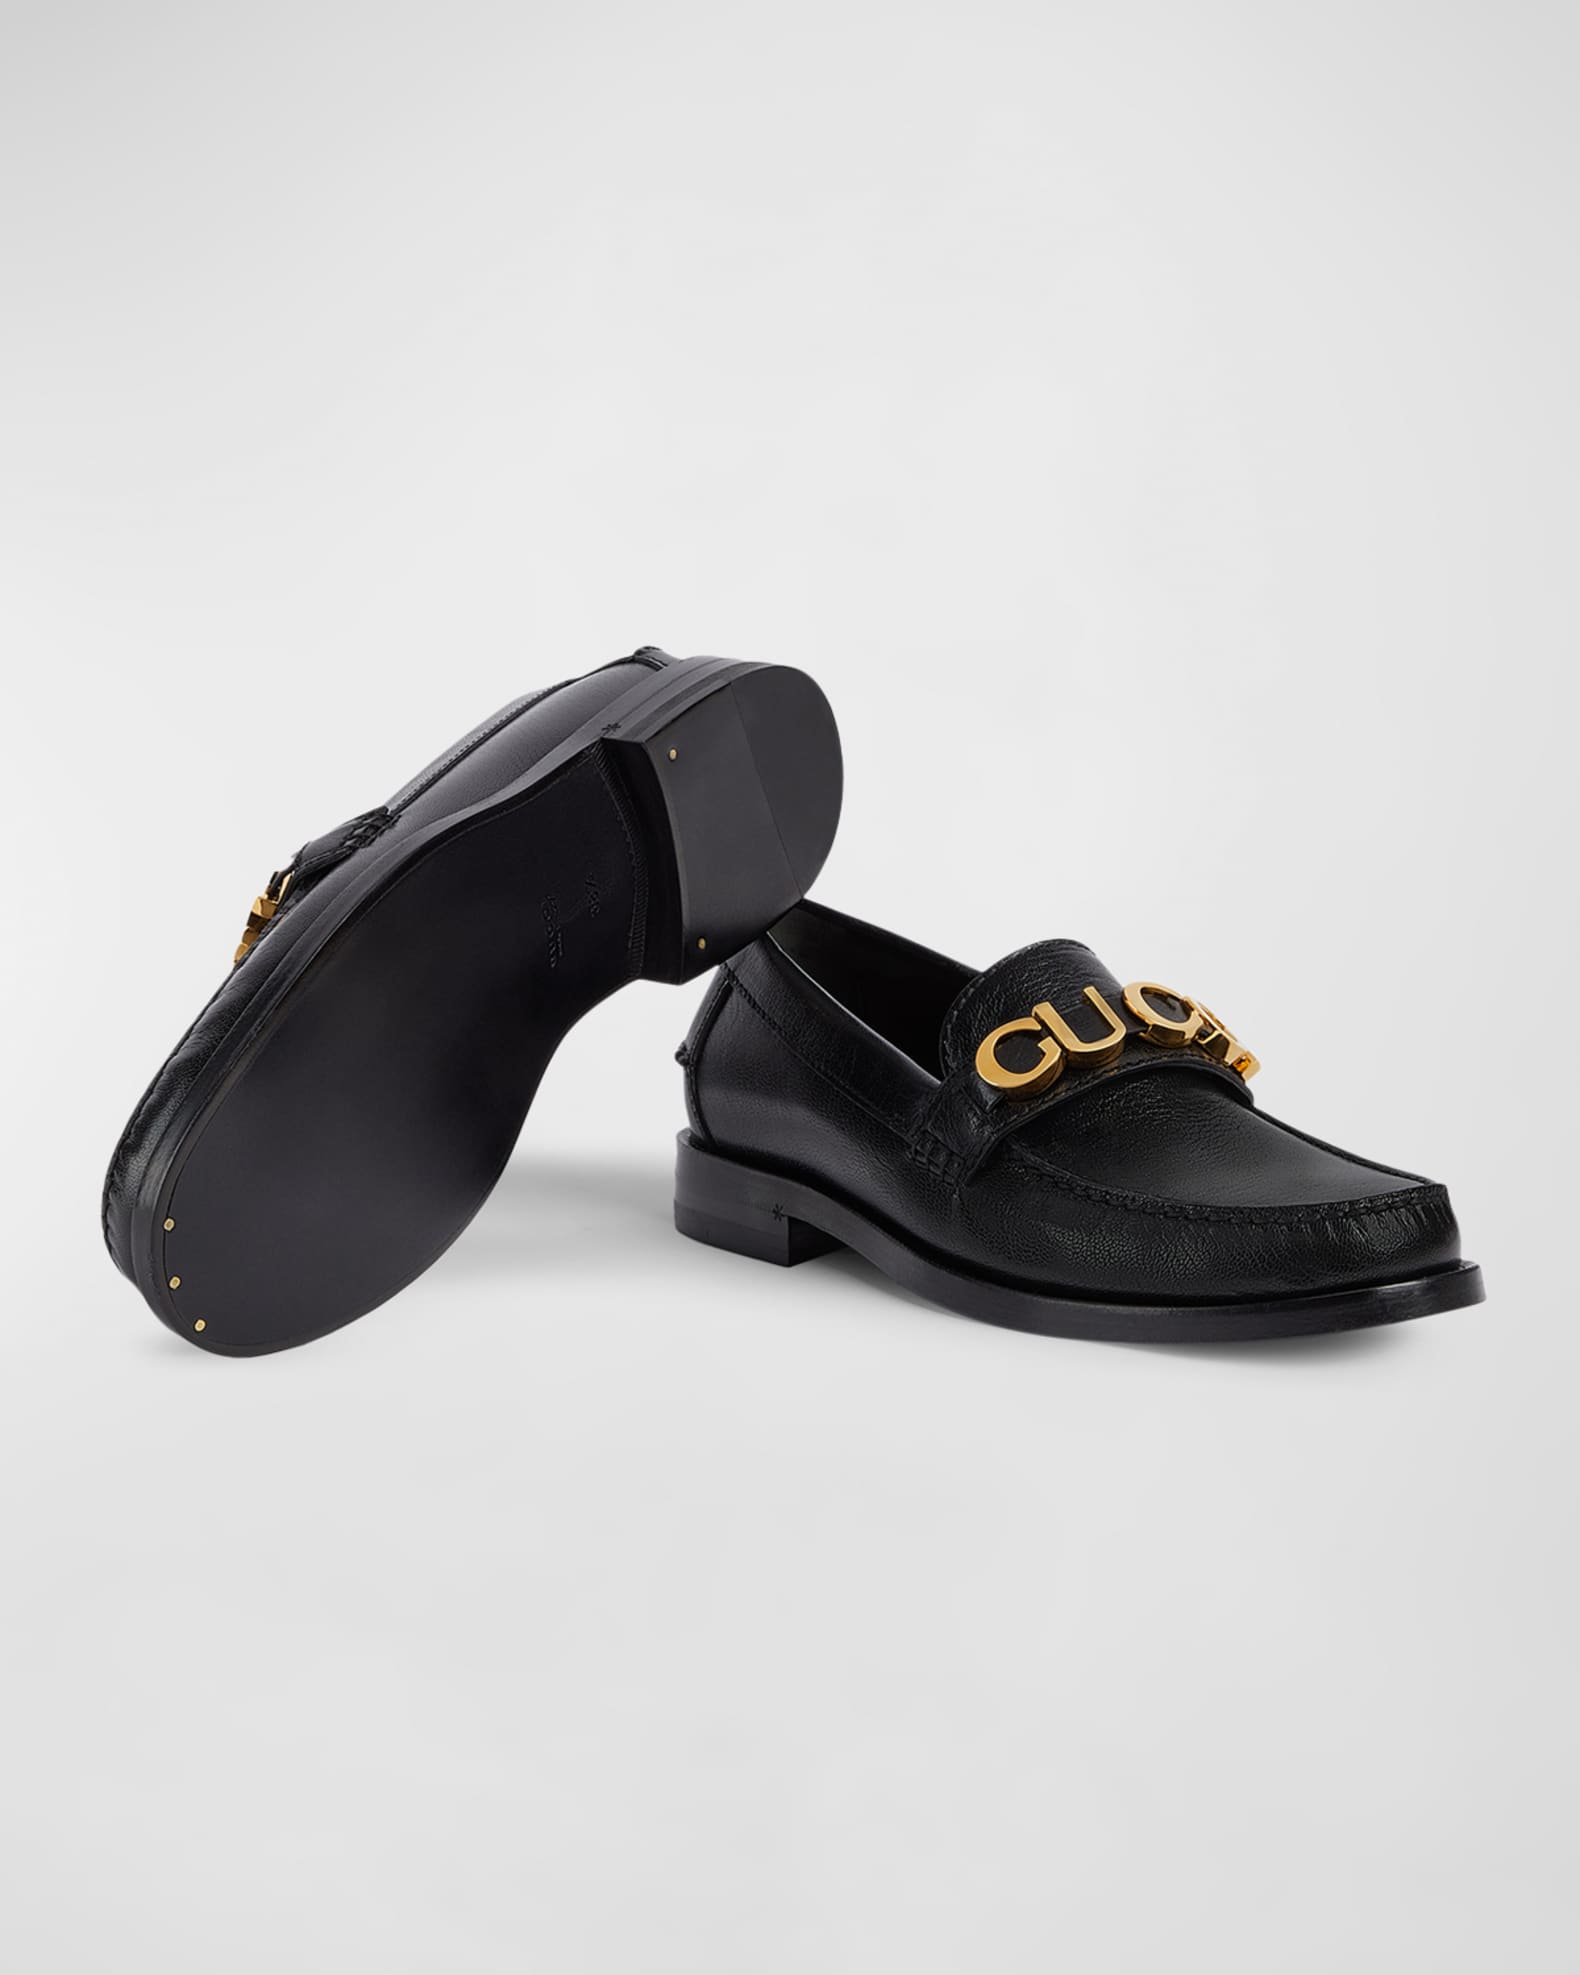 Gucci Men's Cara Gold Logo Black Leather Loafers Dress Shoes Size 9 UK